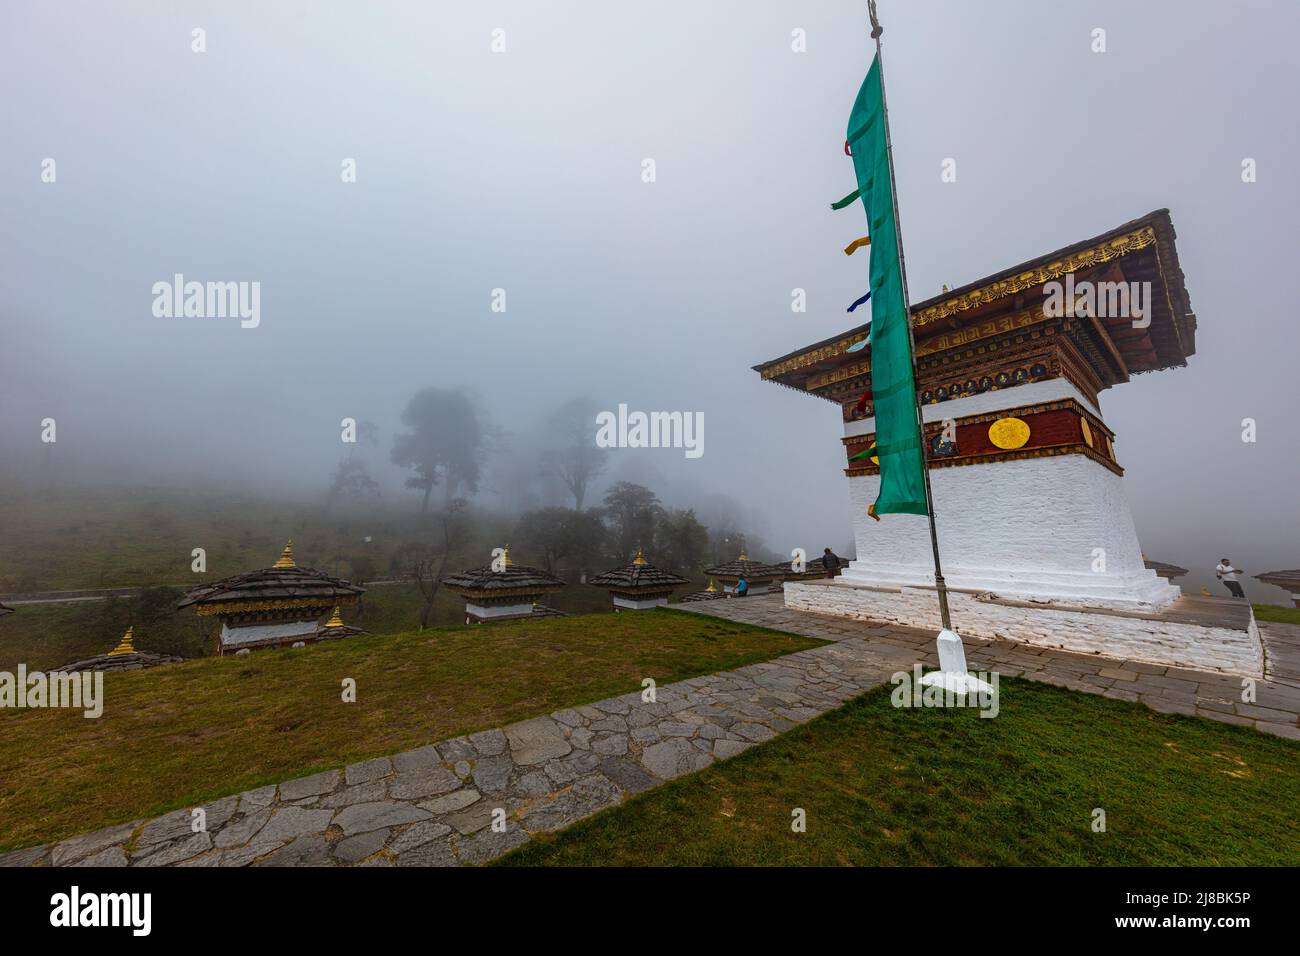 Bhutan, October 26, 2021: Druk Wangyal, Bhutan, 108 chorten or stupas, memorial in honor of the Bhutanese soldiers at the Dochula Pass. Cloudy foggy d Stock Photo